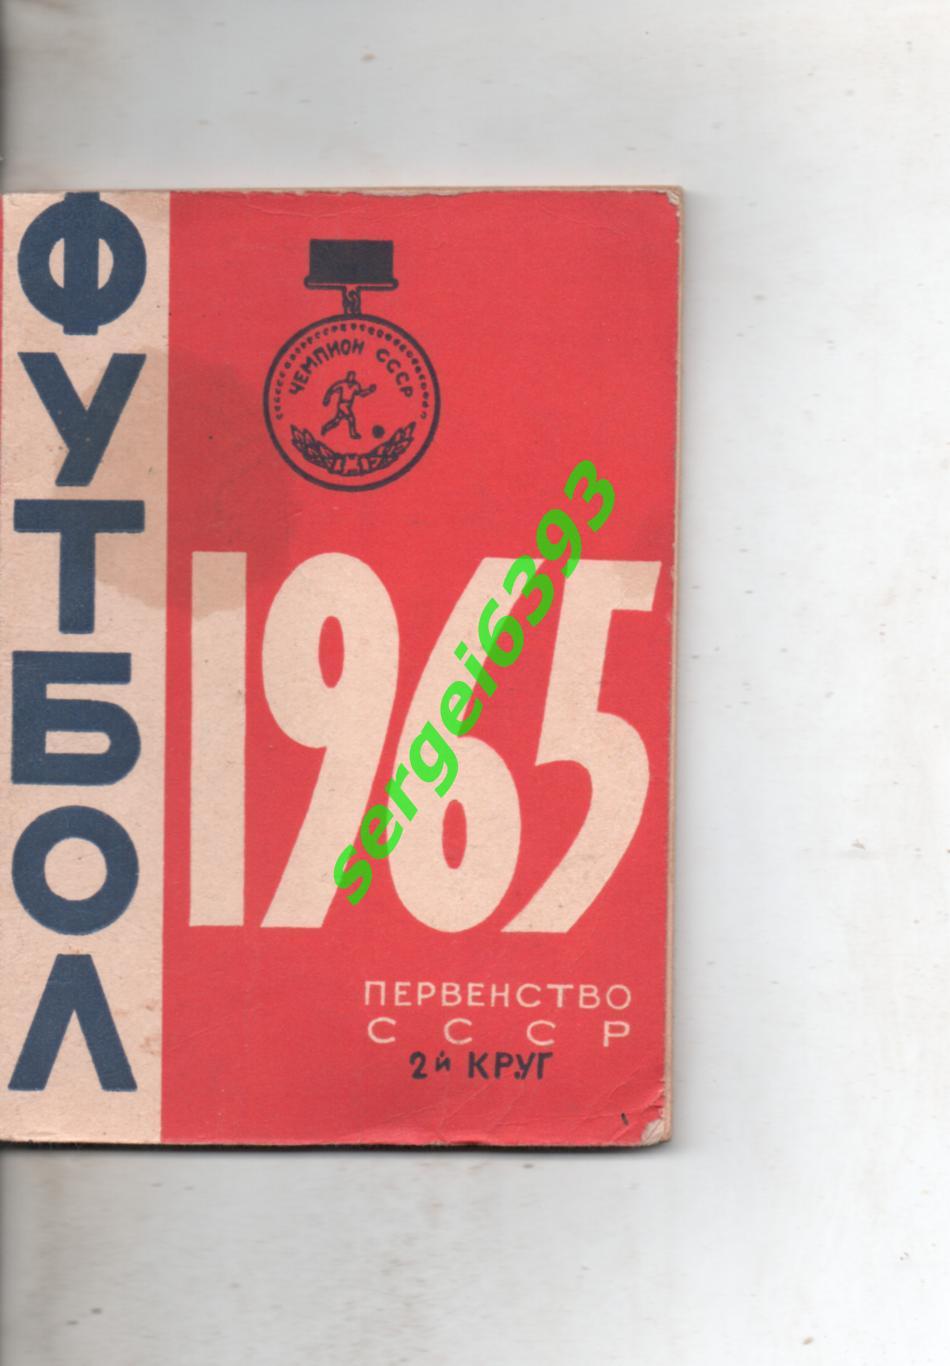 Минск 1965. 2 круг